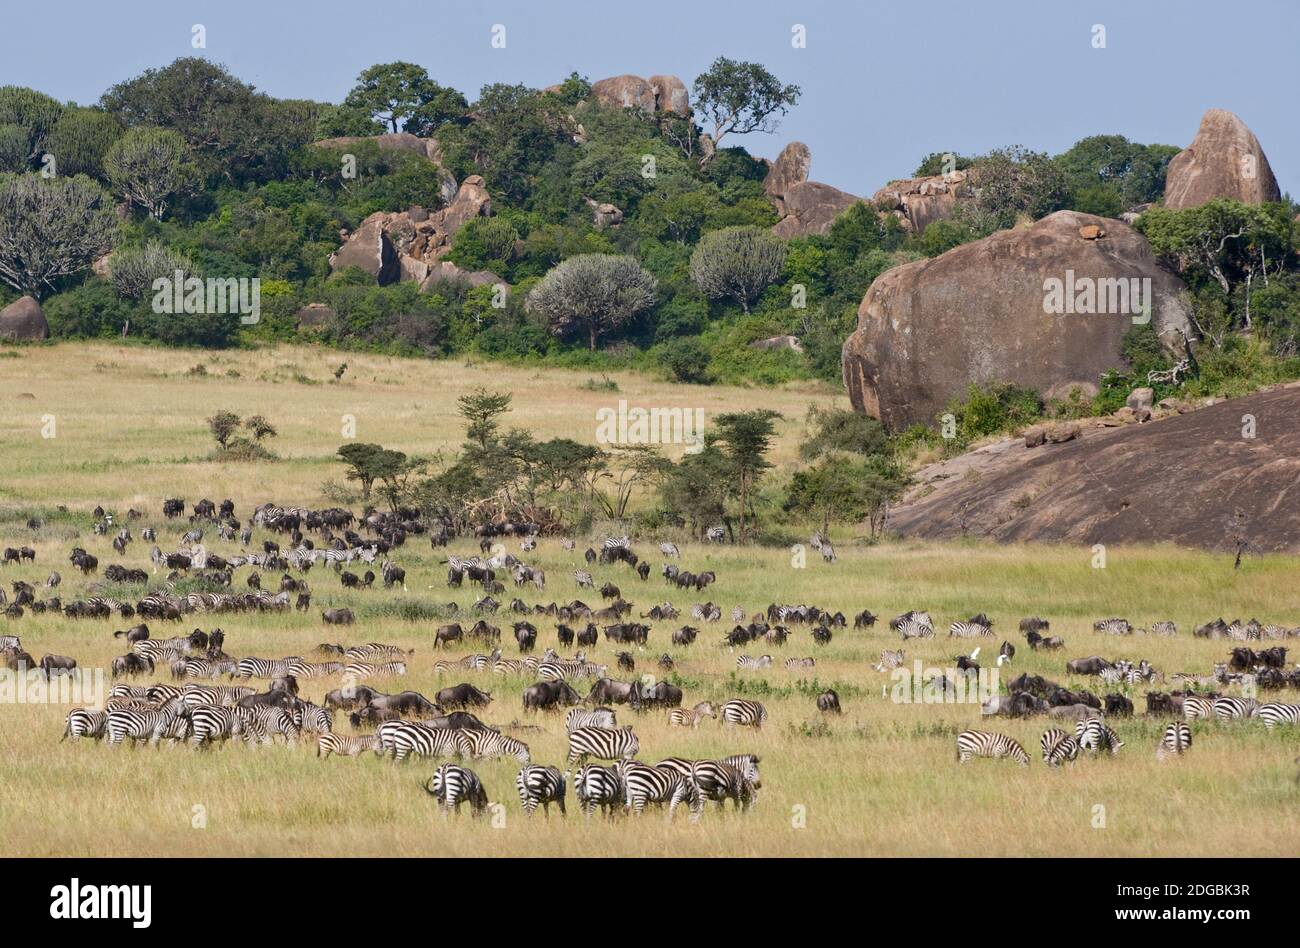 Zebras and Wildebeests (Connochaetes taurinus) during migration, Serengeti National Park, Tanzania Stock Photo